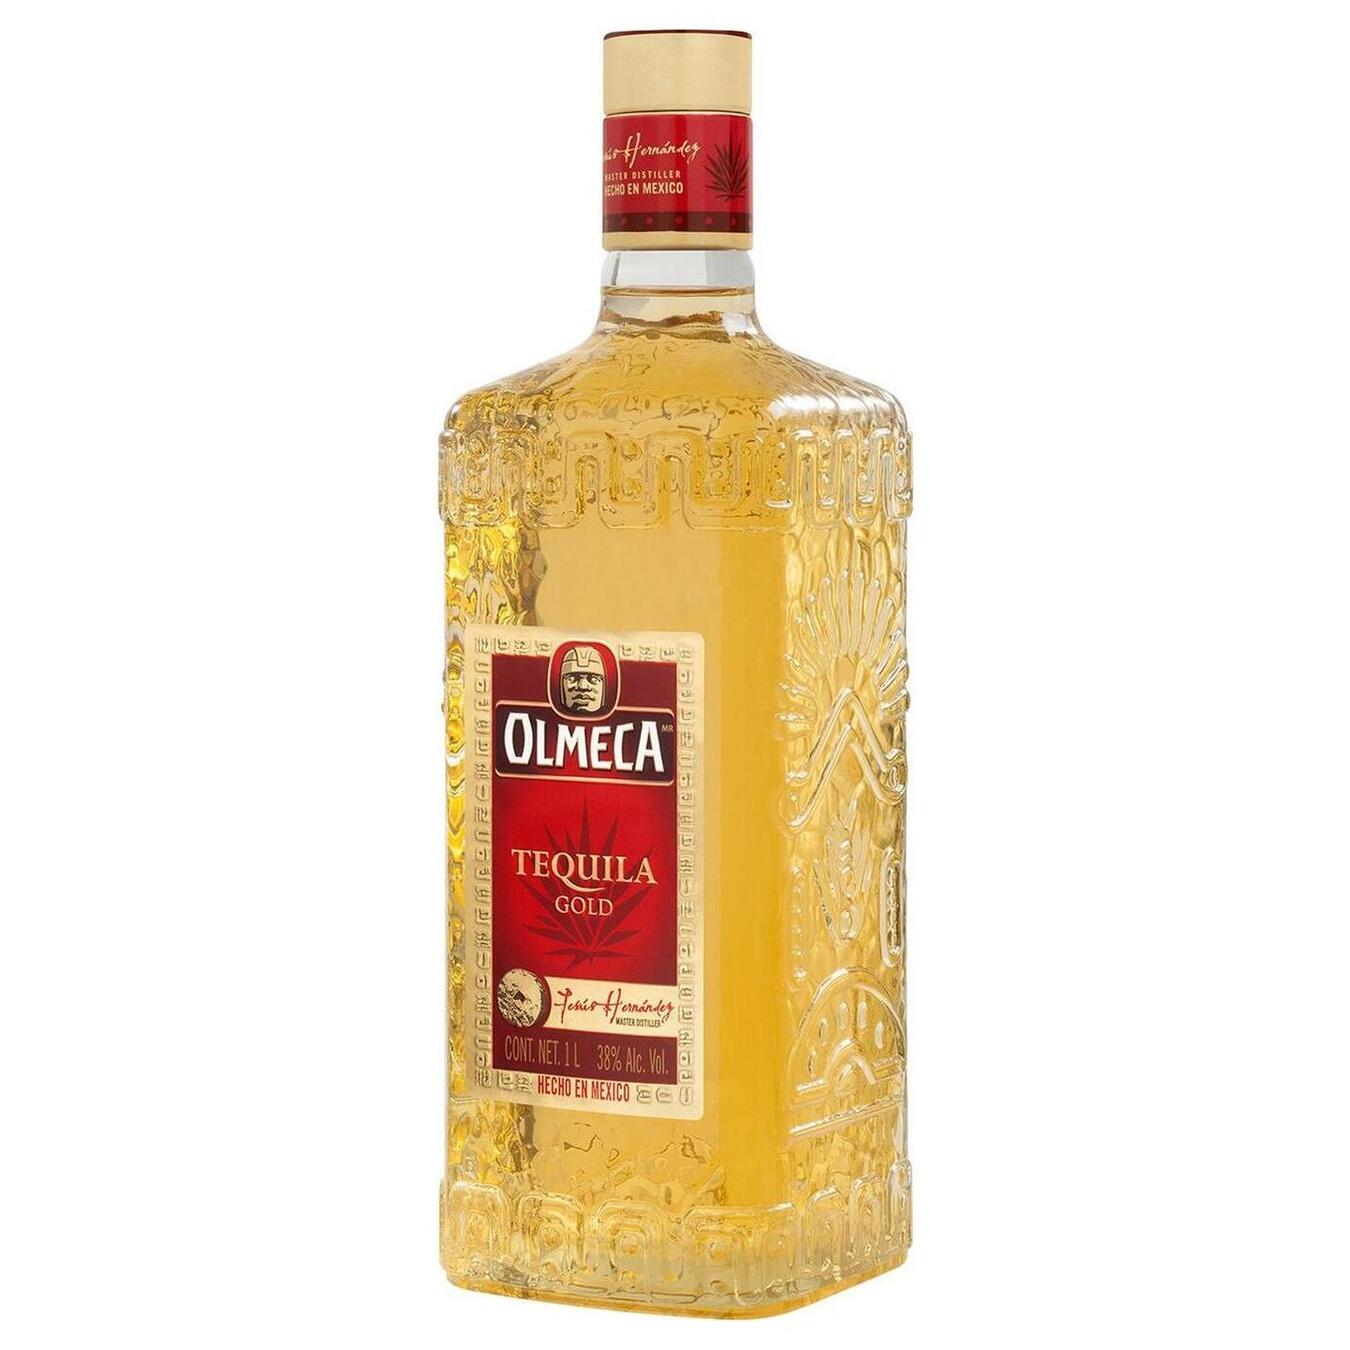 Tequila Olmeca Gold 38% 1l 2